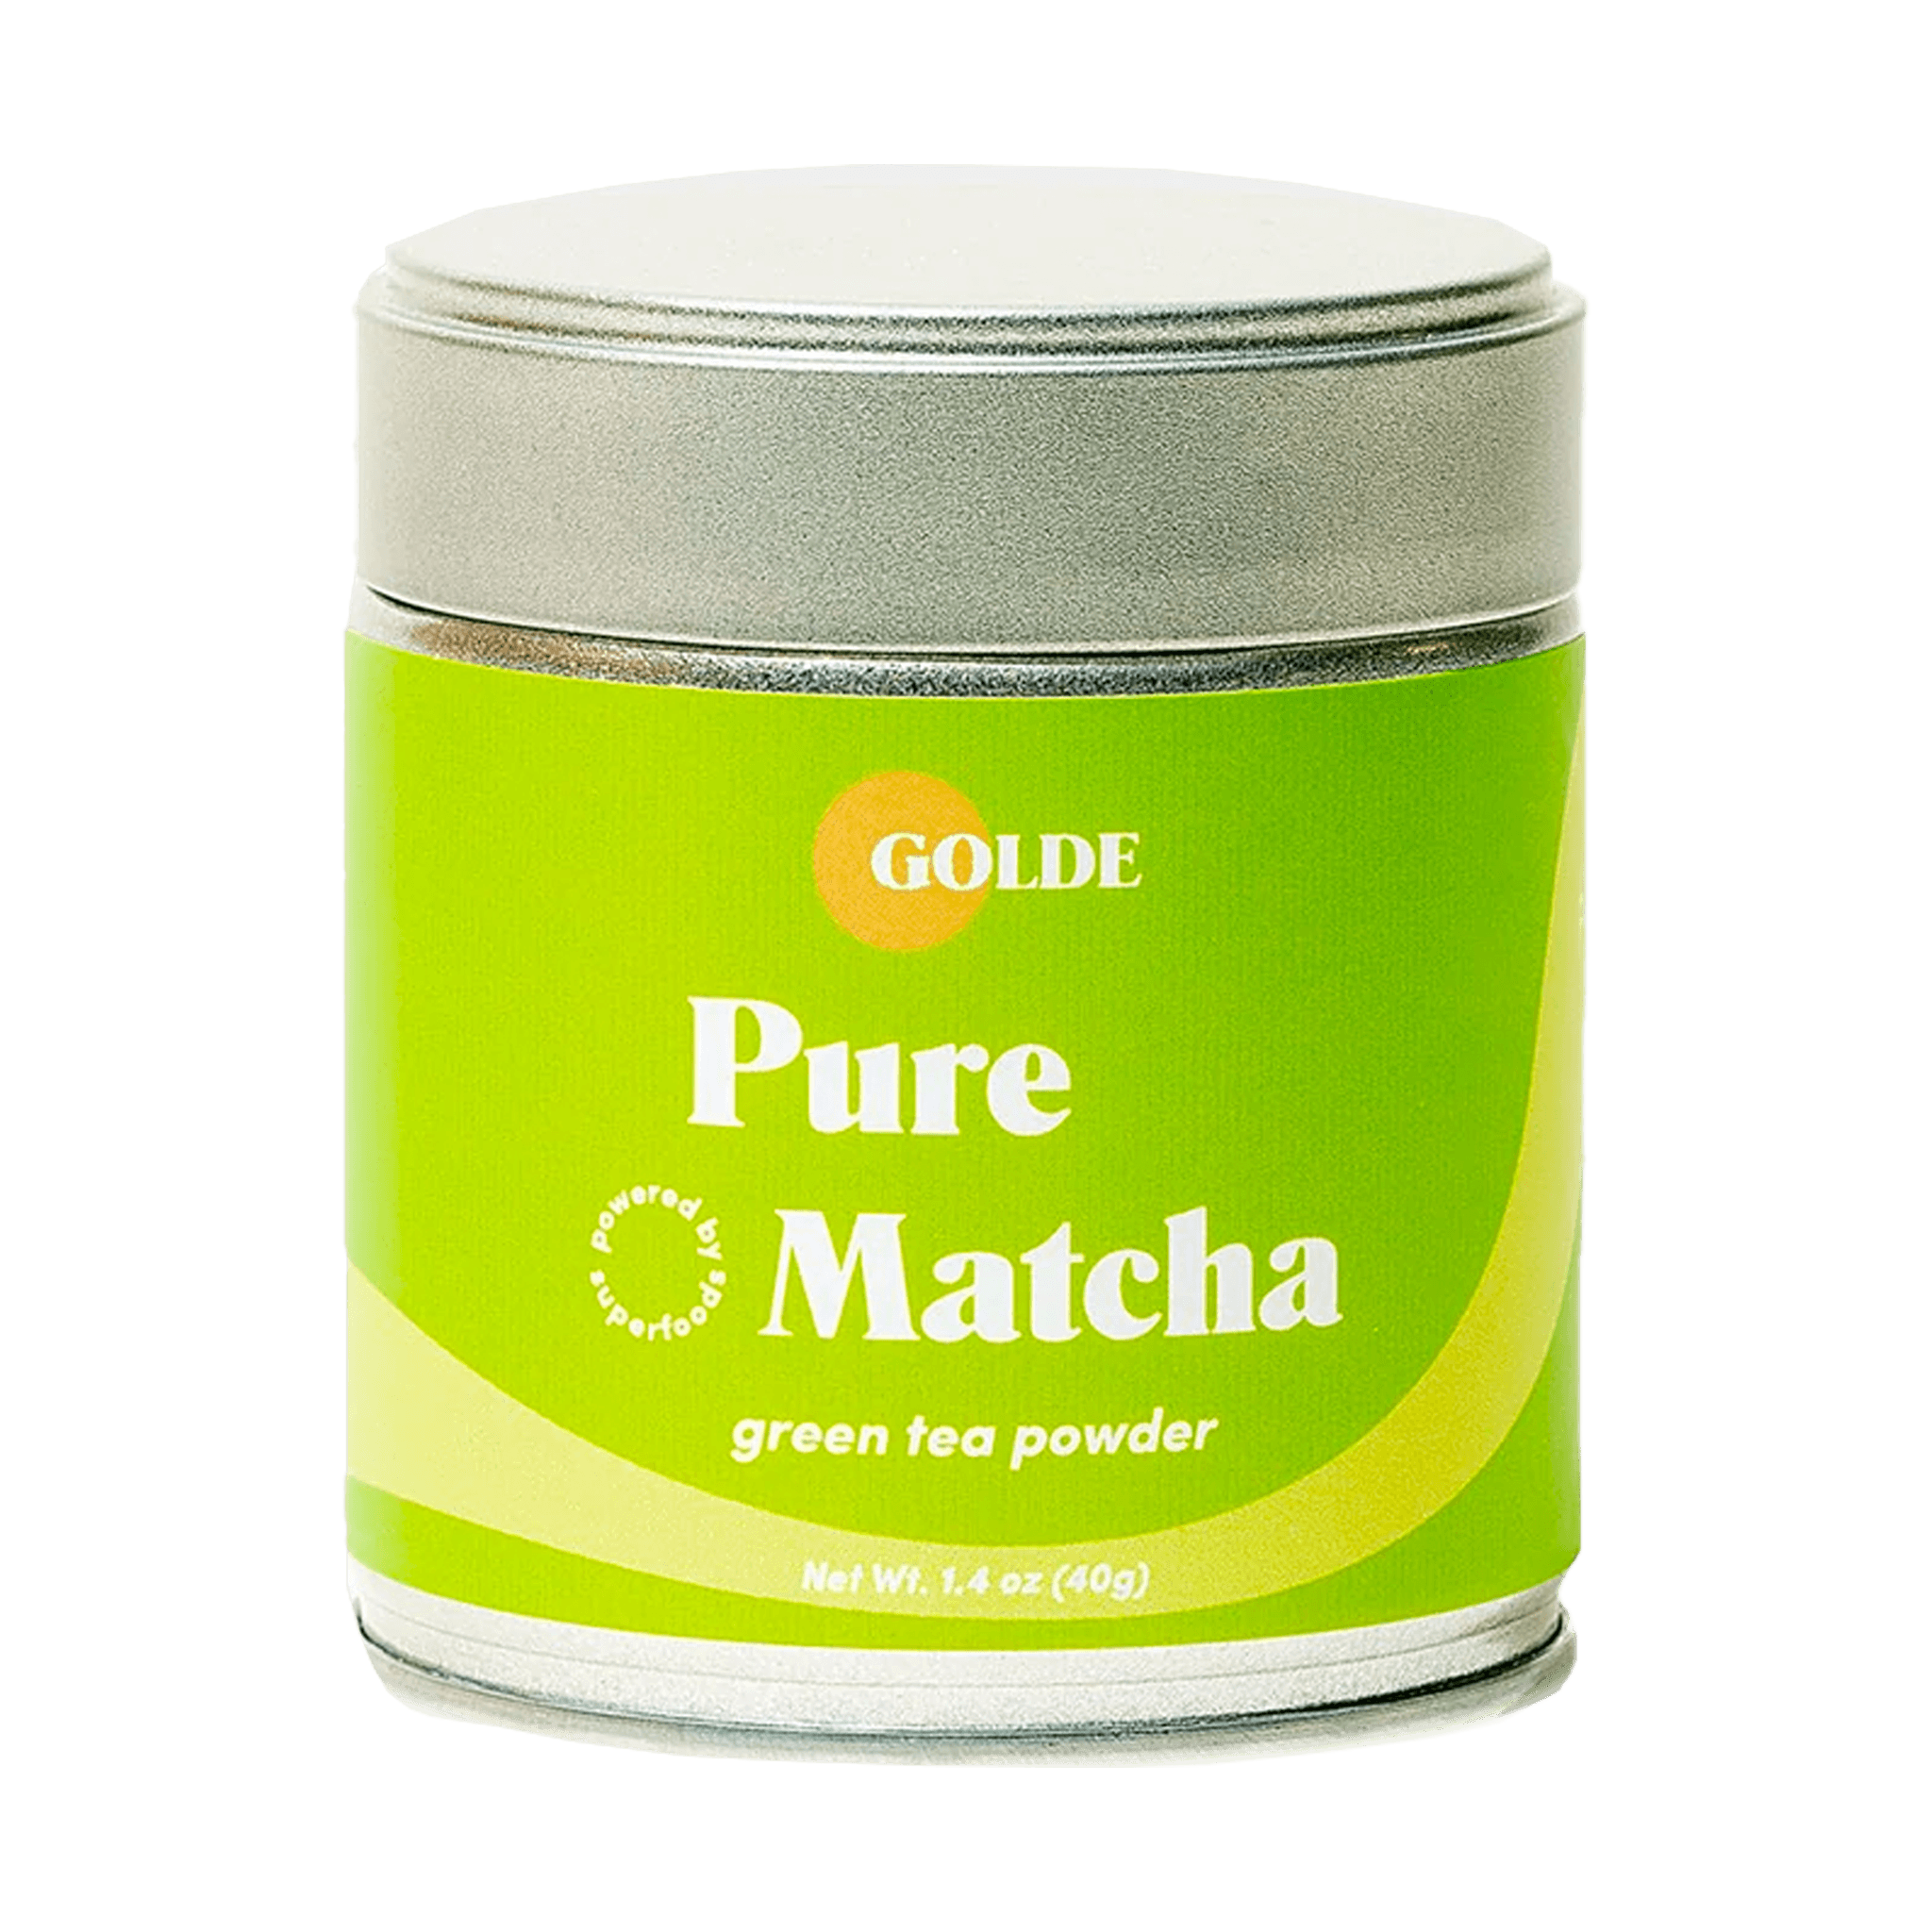 Pure Matcha - Golde - Consumerhaus